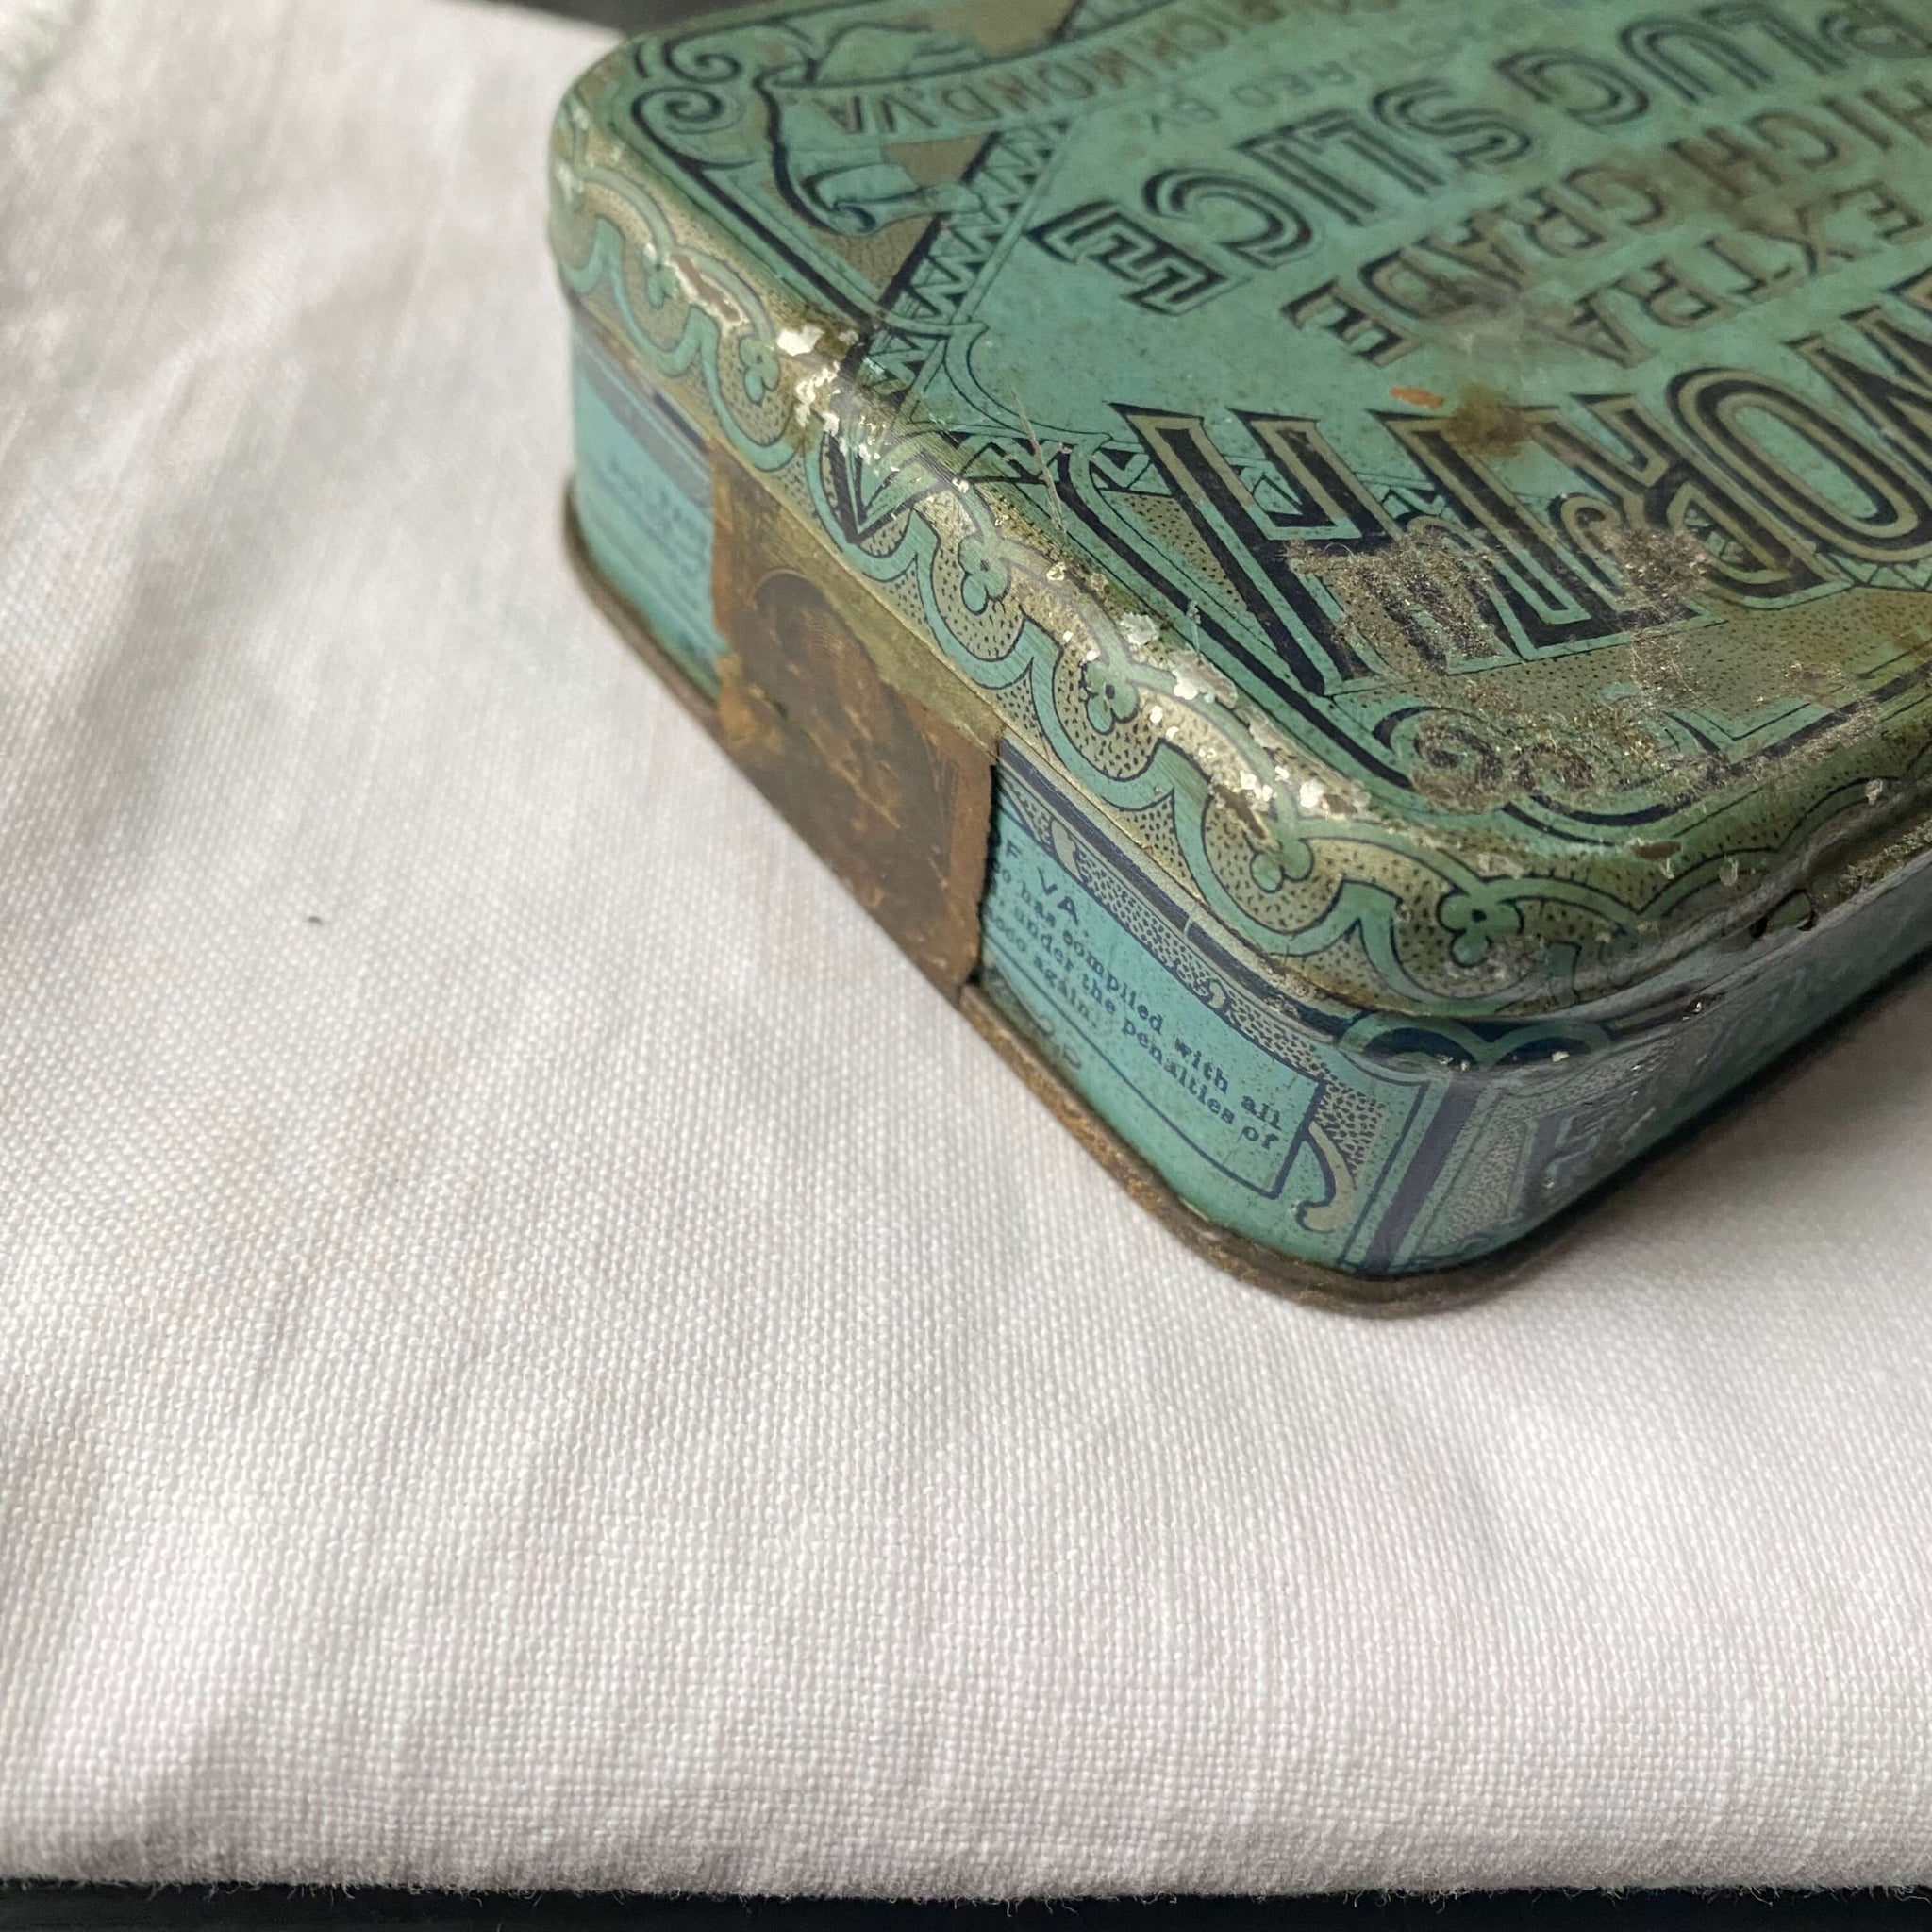 Antique 1920s Edgeworth Tobacco Tin by Larus & Bro Co